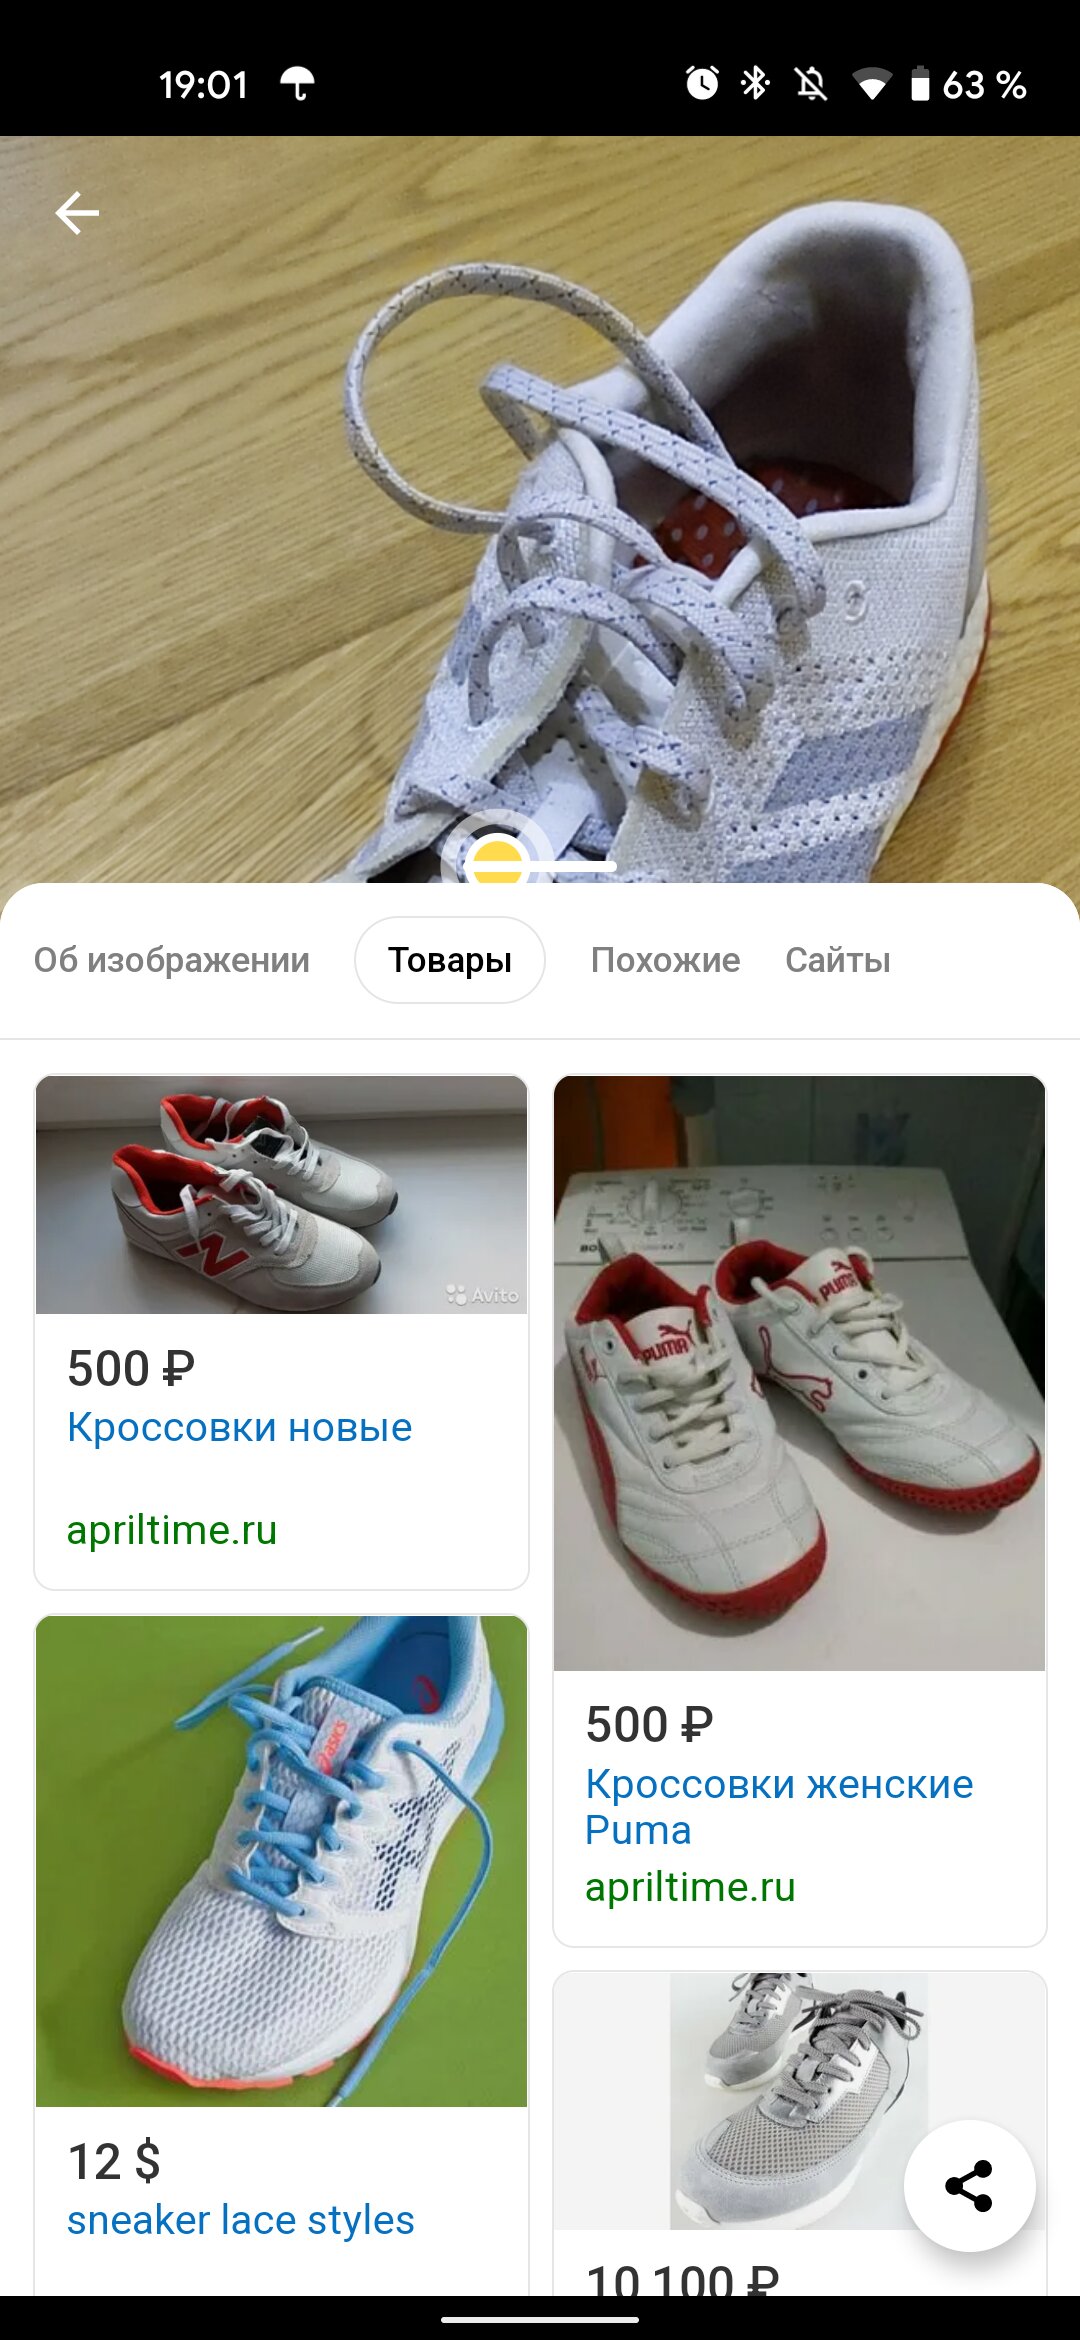 Умная камера Яндекс